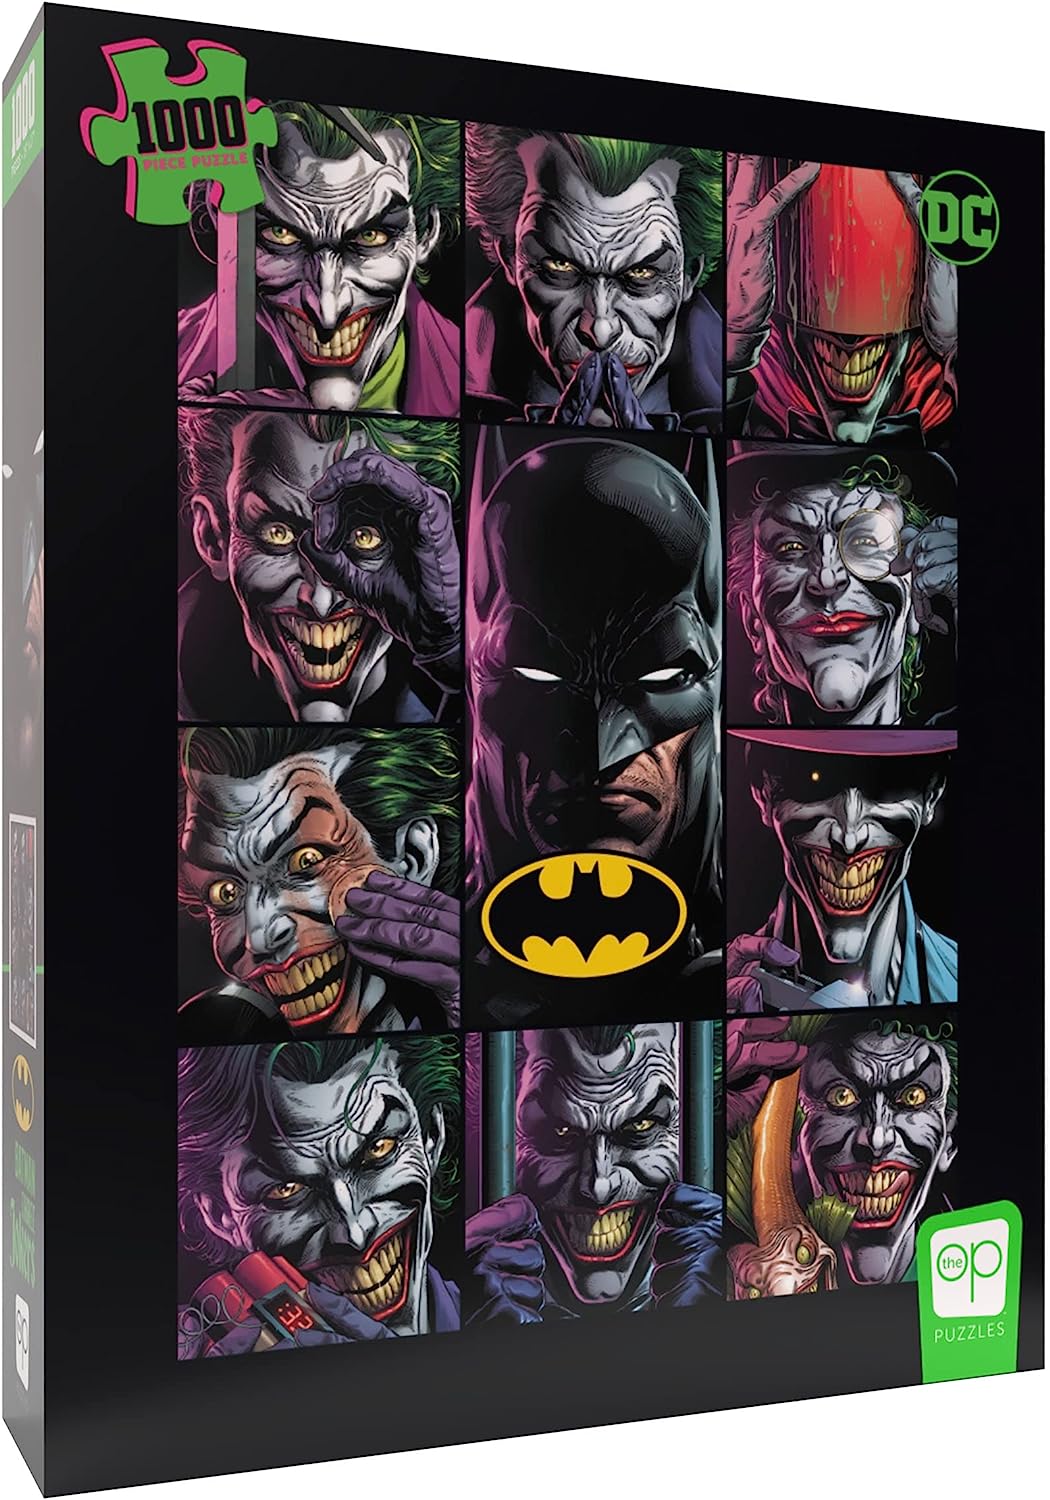 Batman “Three Jokers” 1000 Piece Jigsaw Puzzle